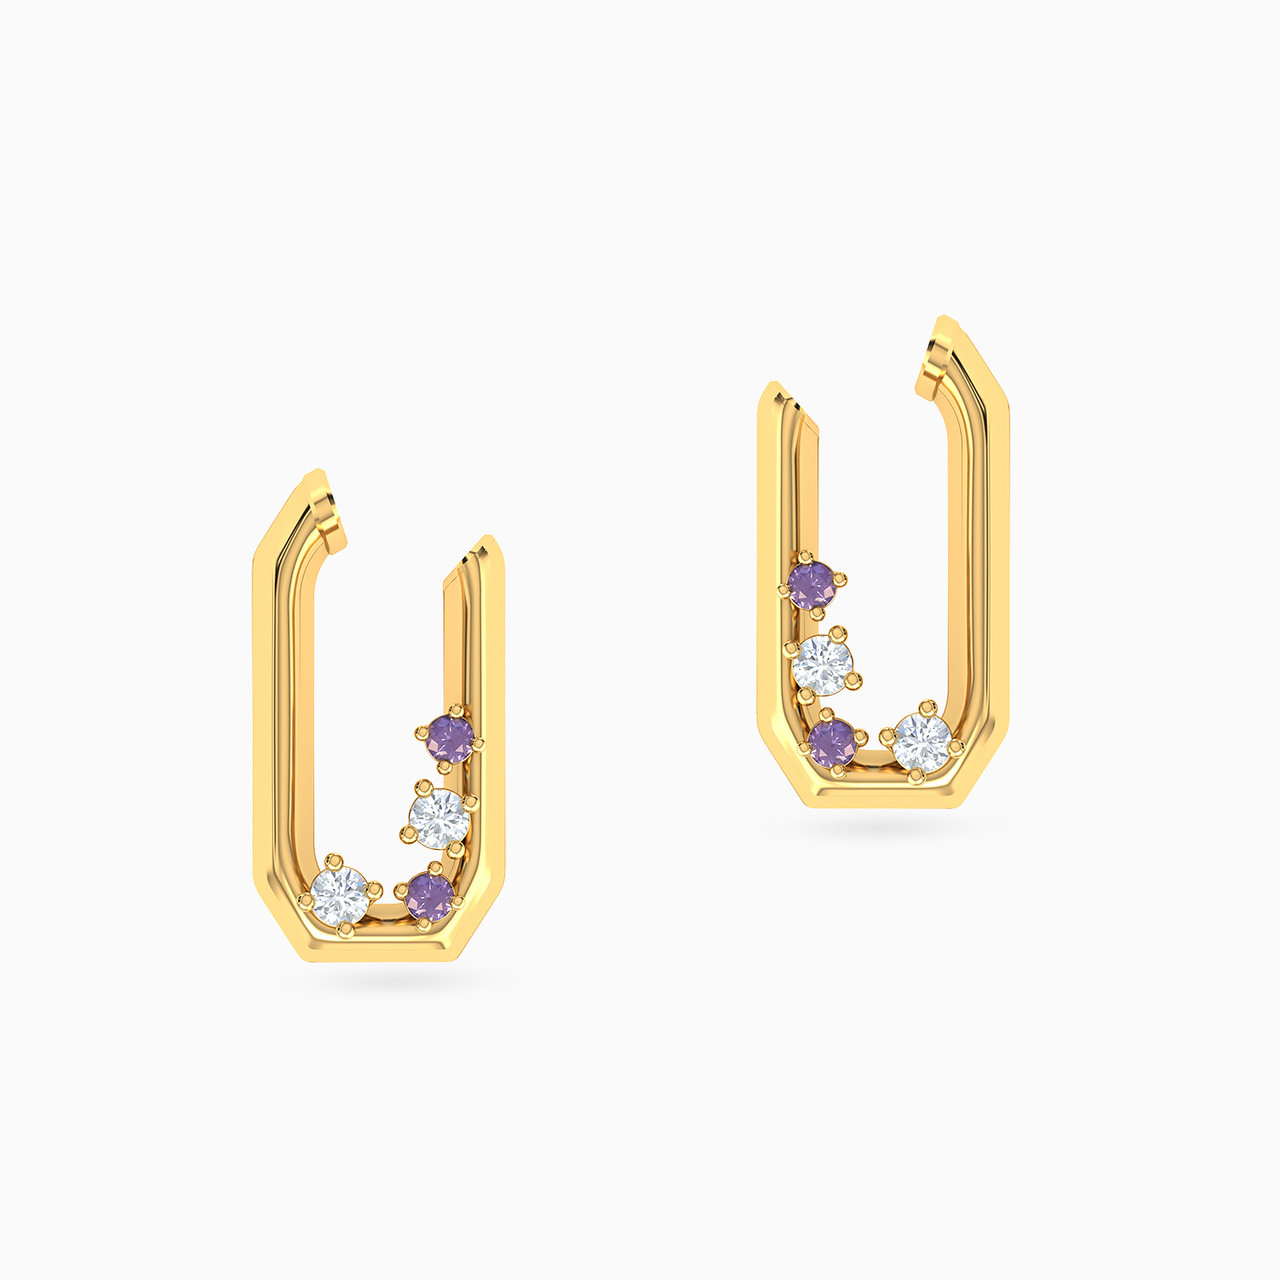 U Shaped Colored Stones Stud Earrings in 18K Gold